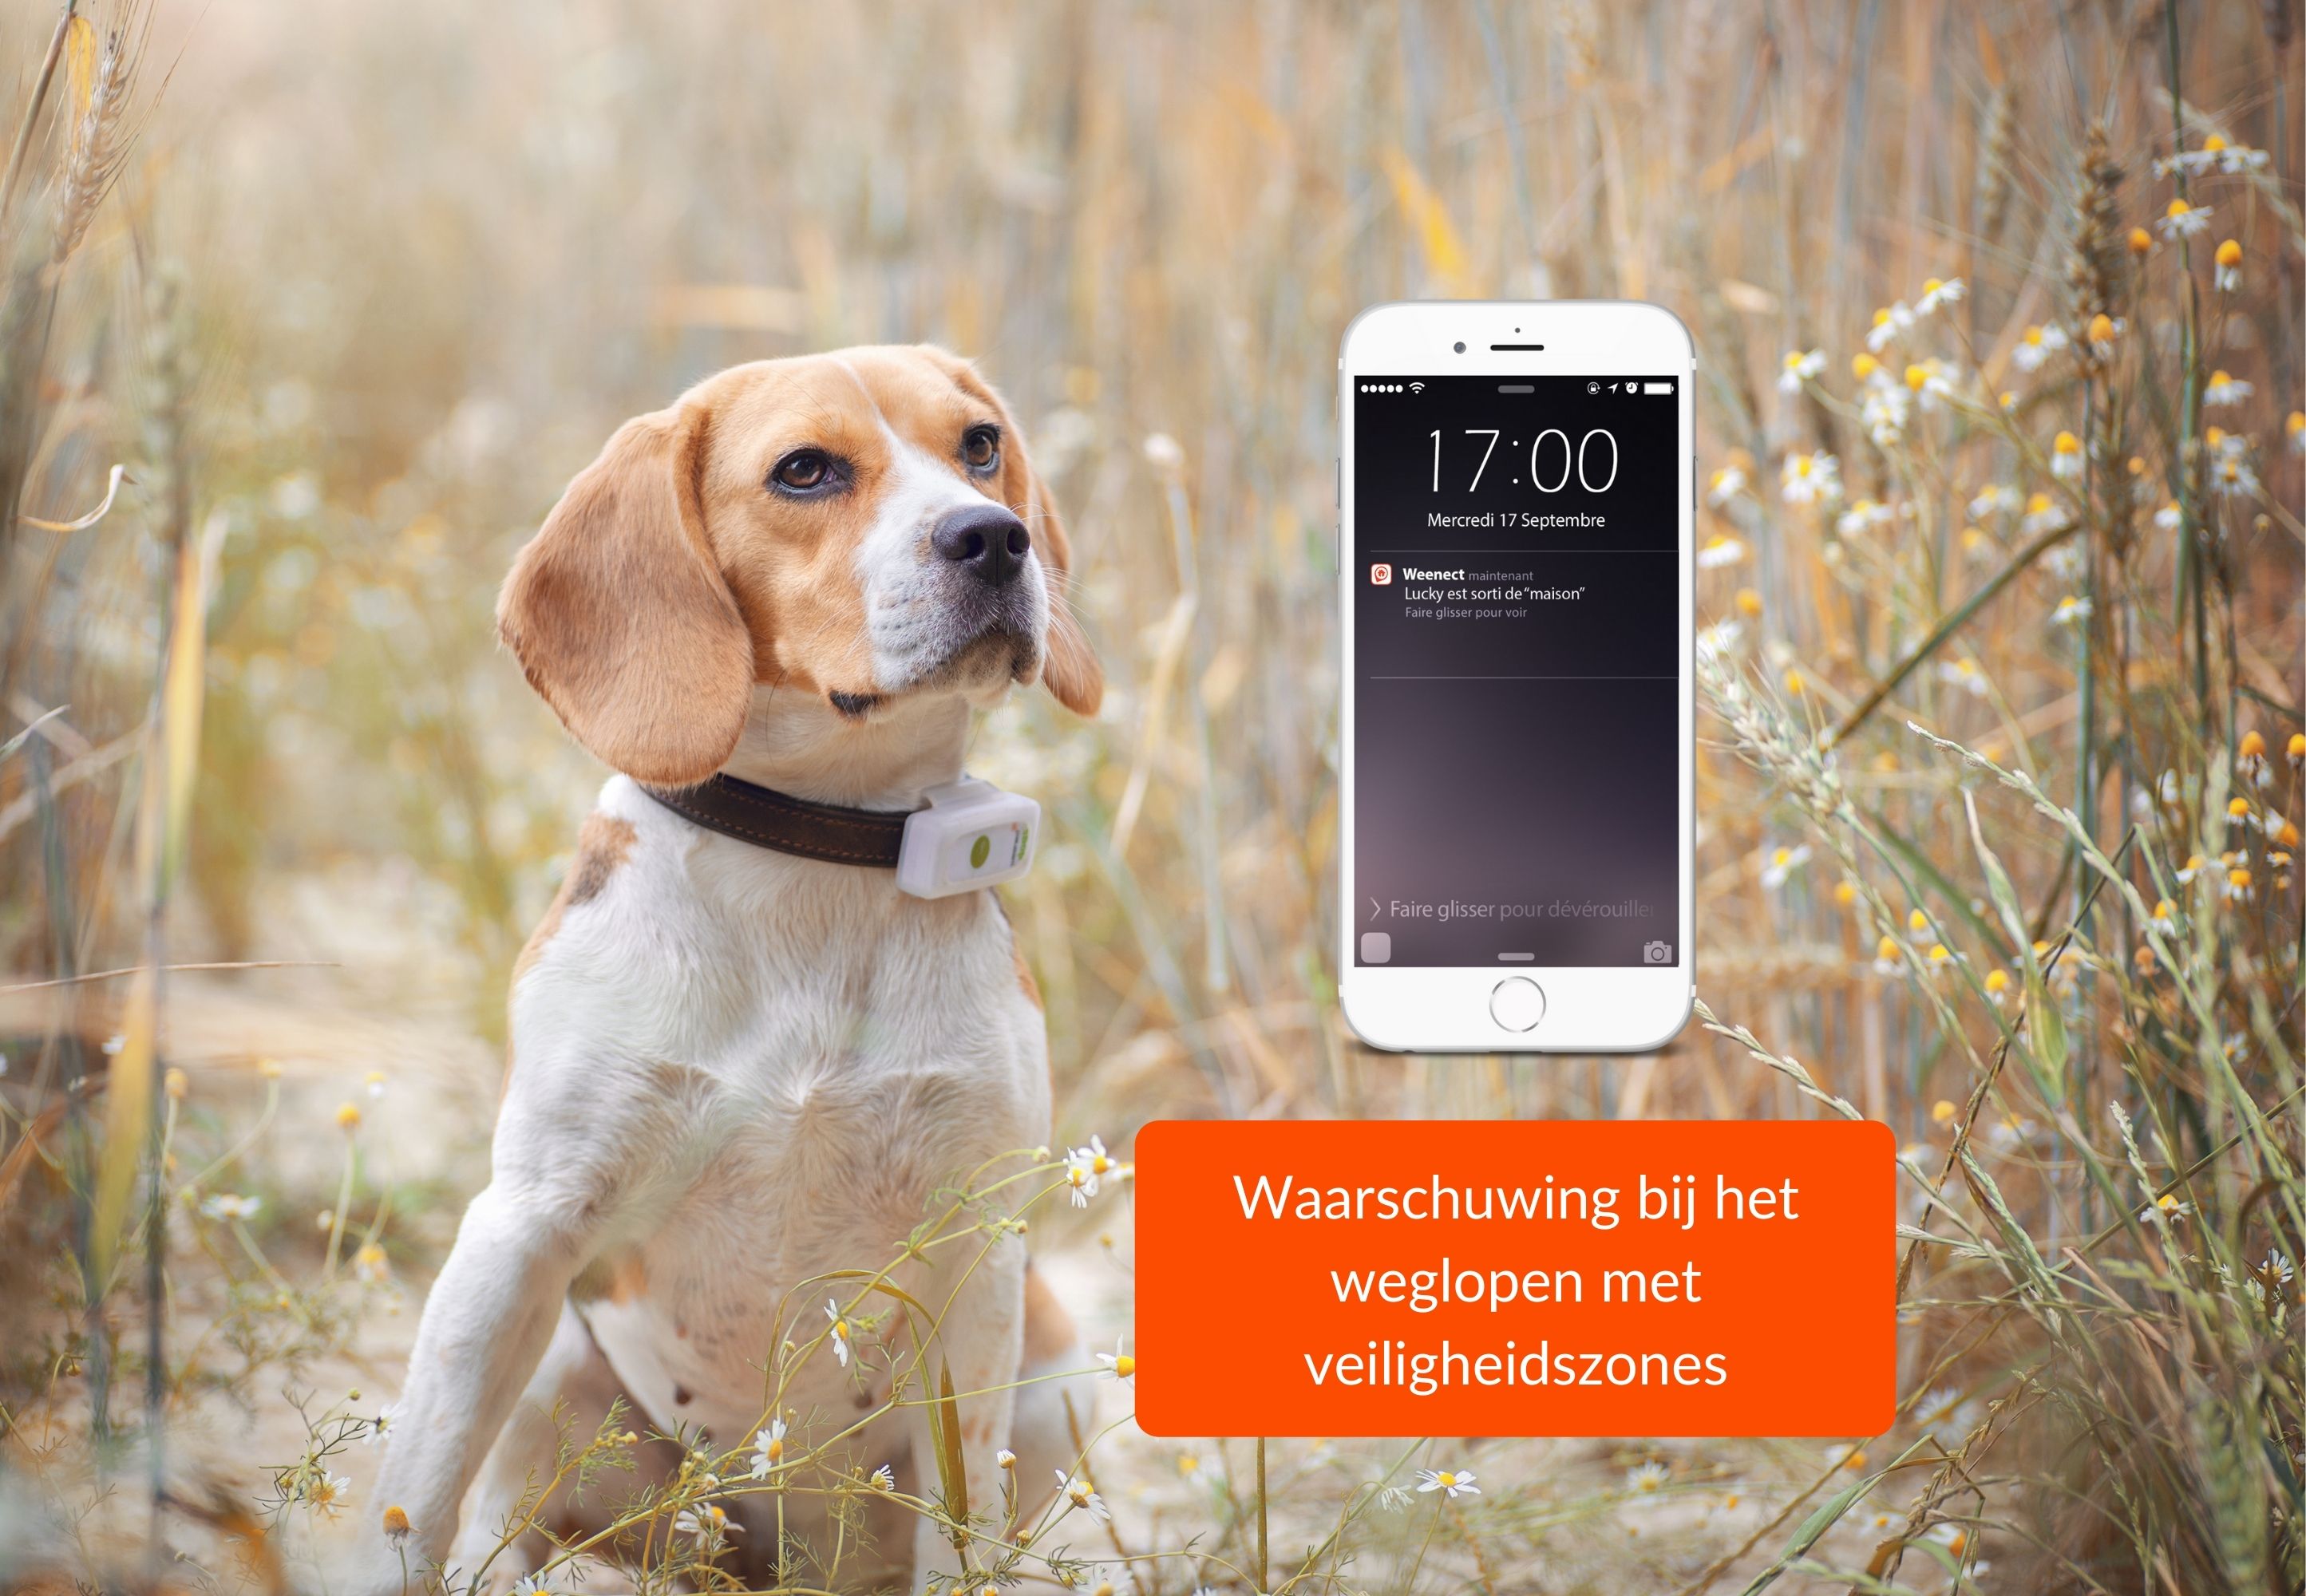 Weenect GPS tracker hond